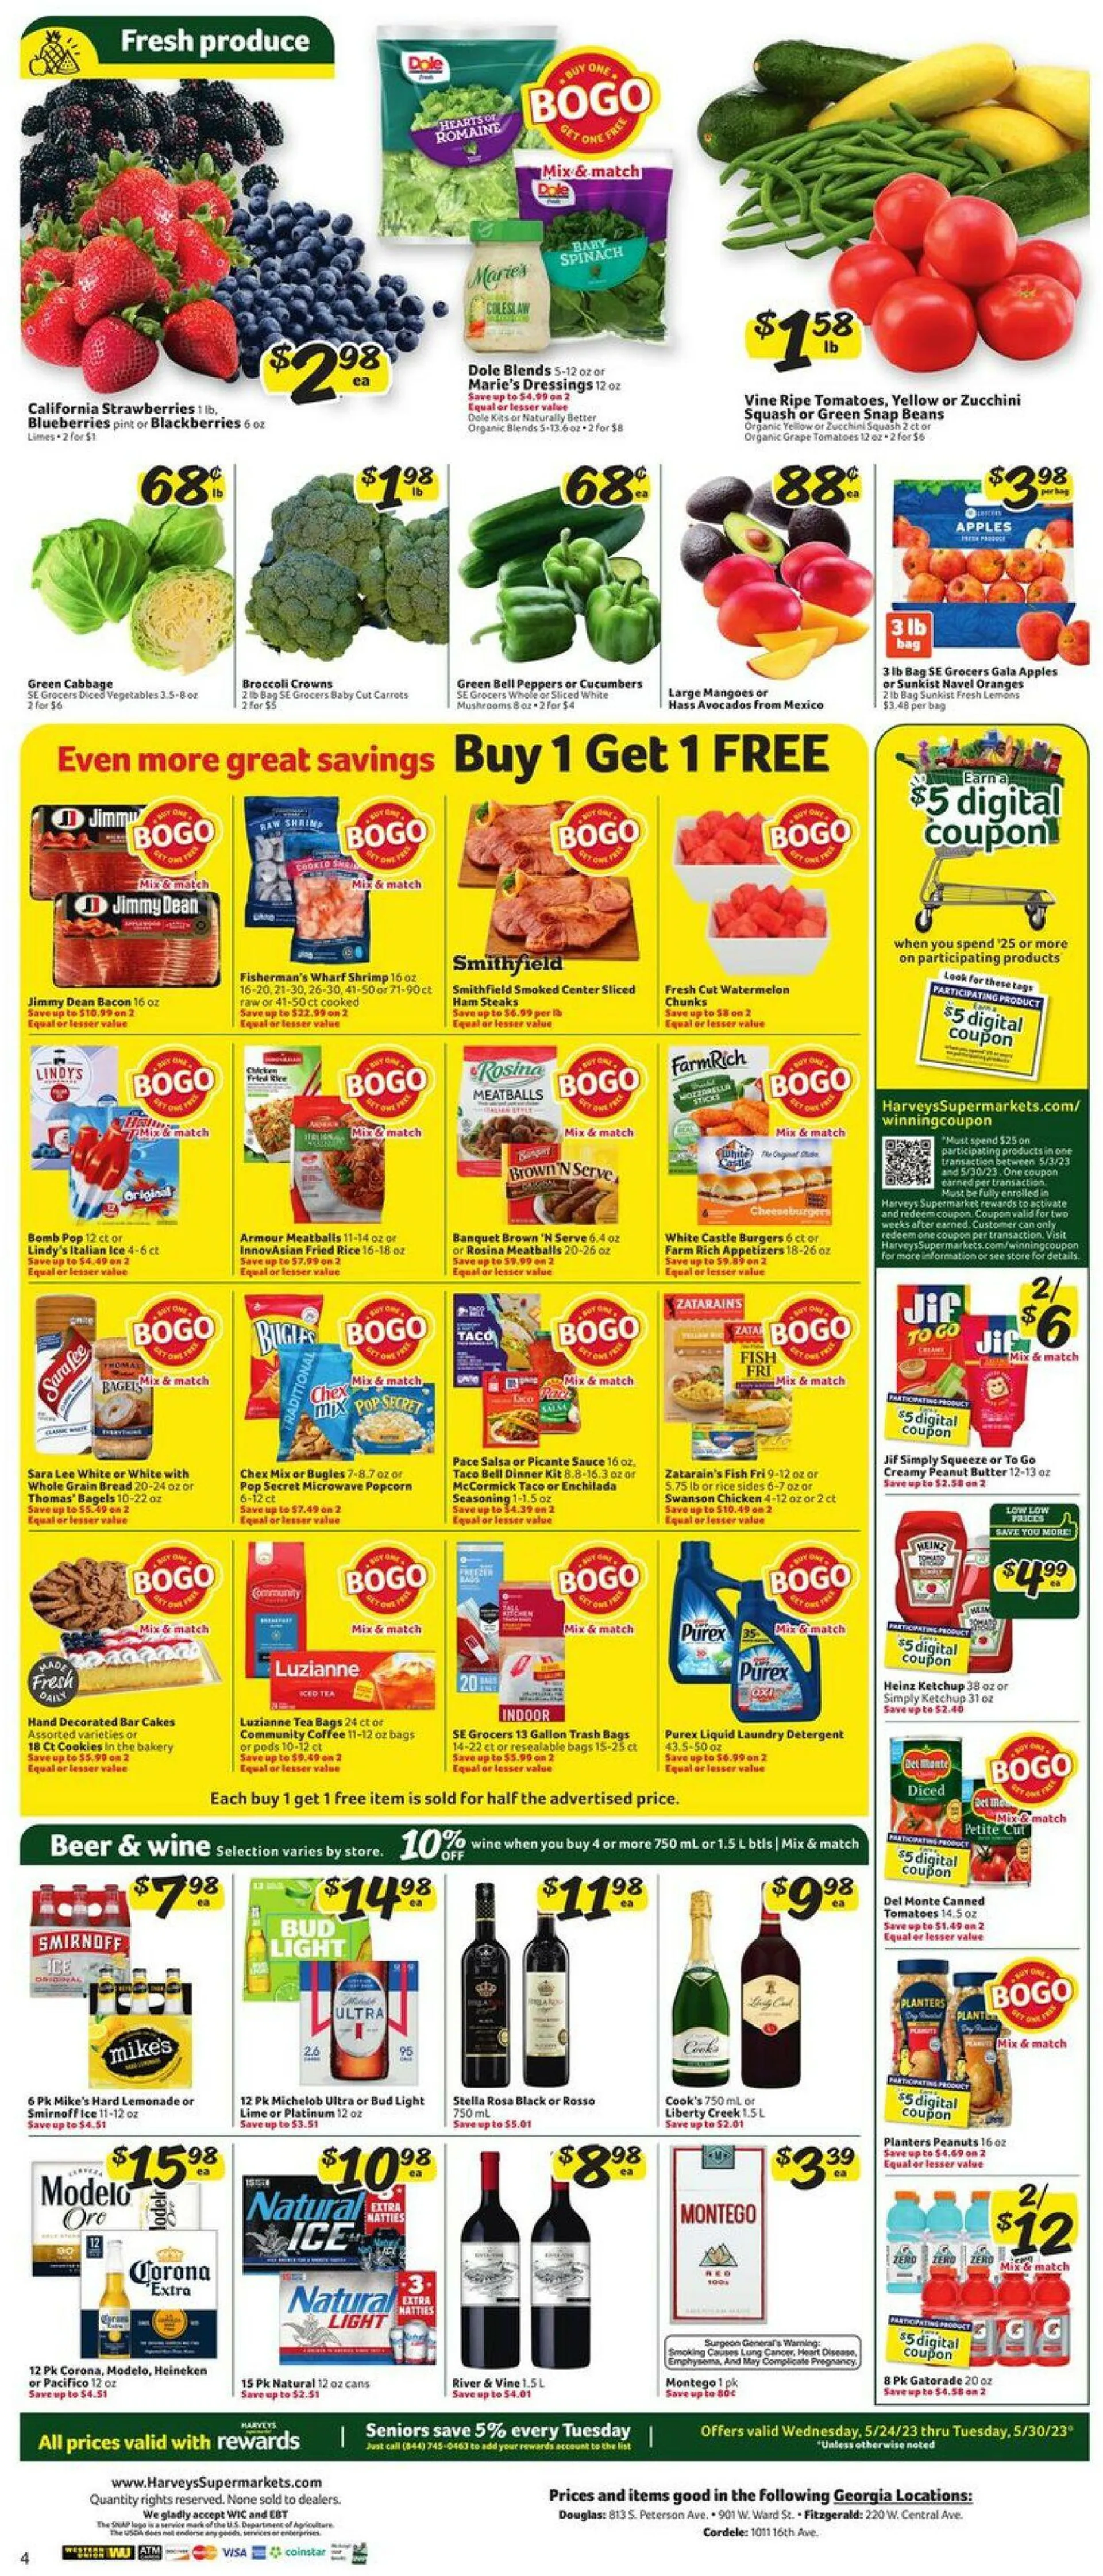 Harveys Supermarket Current weekly ad - 12